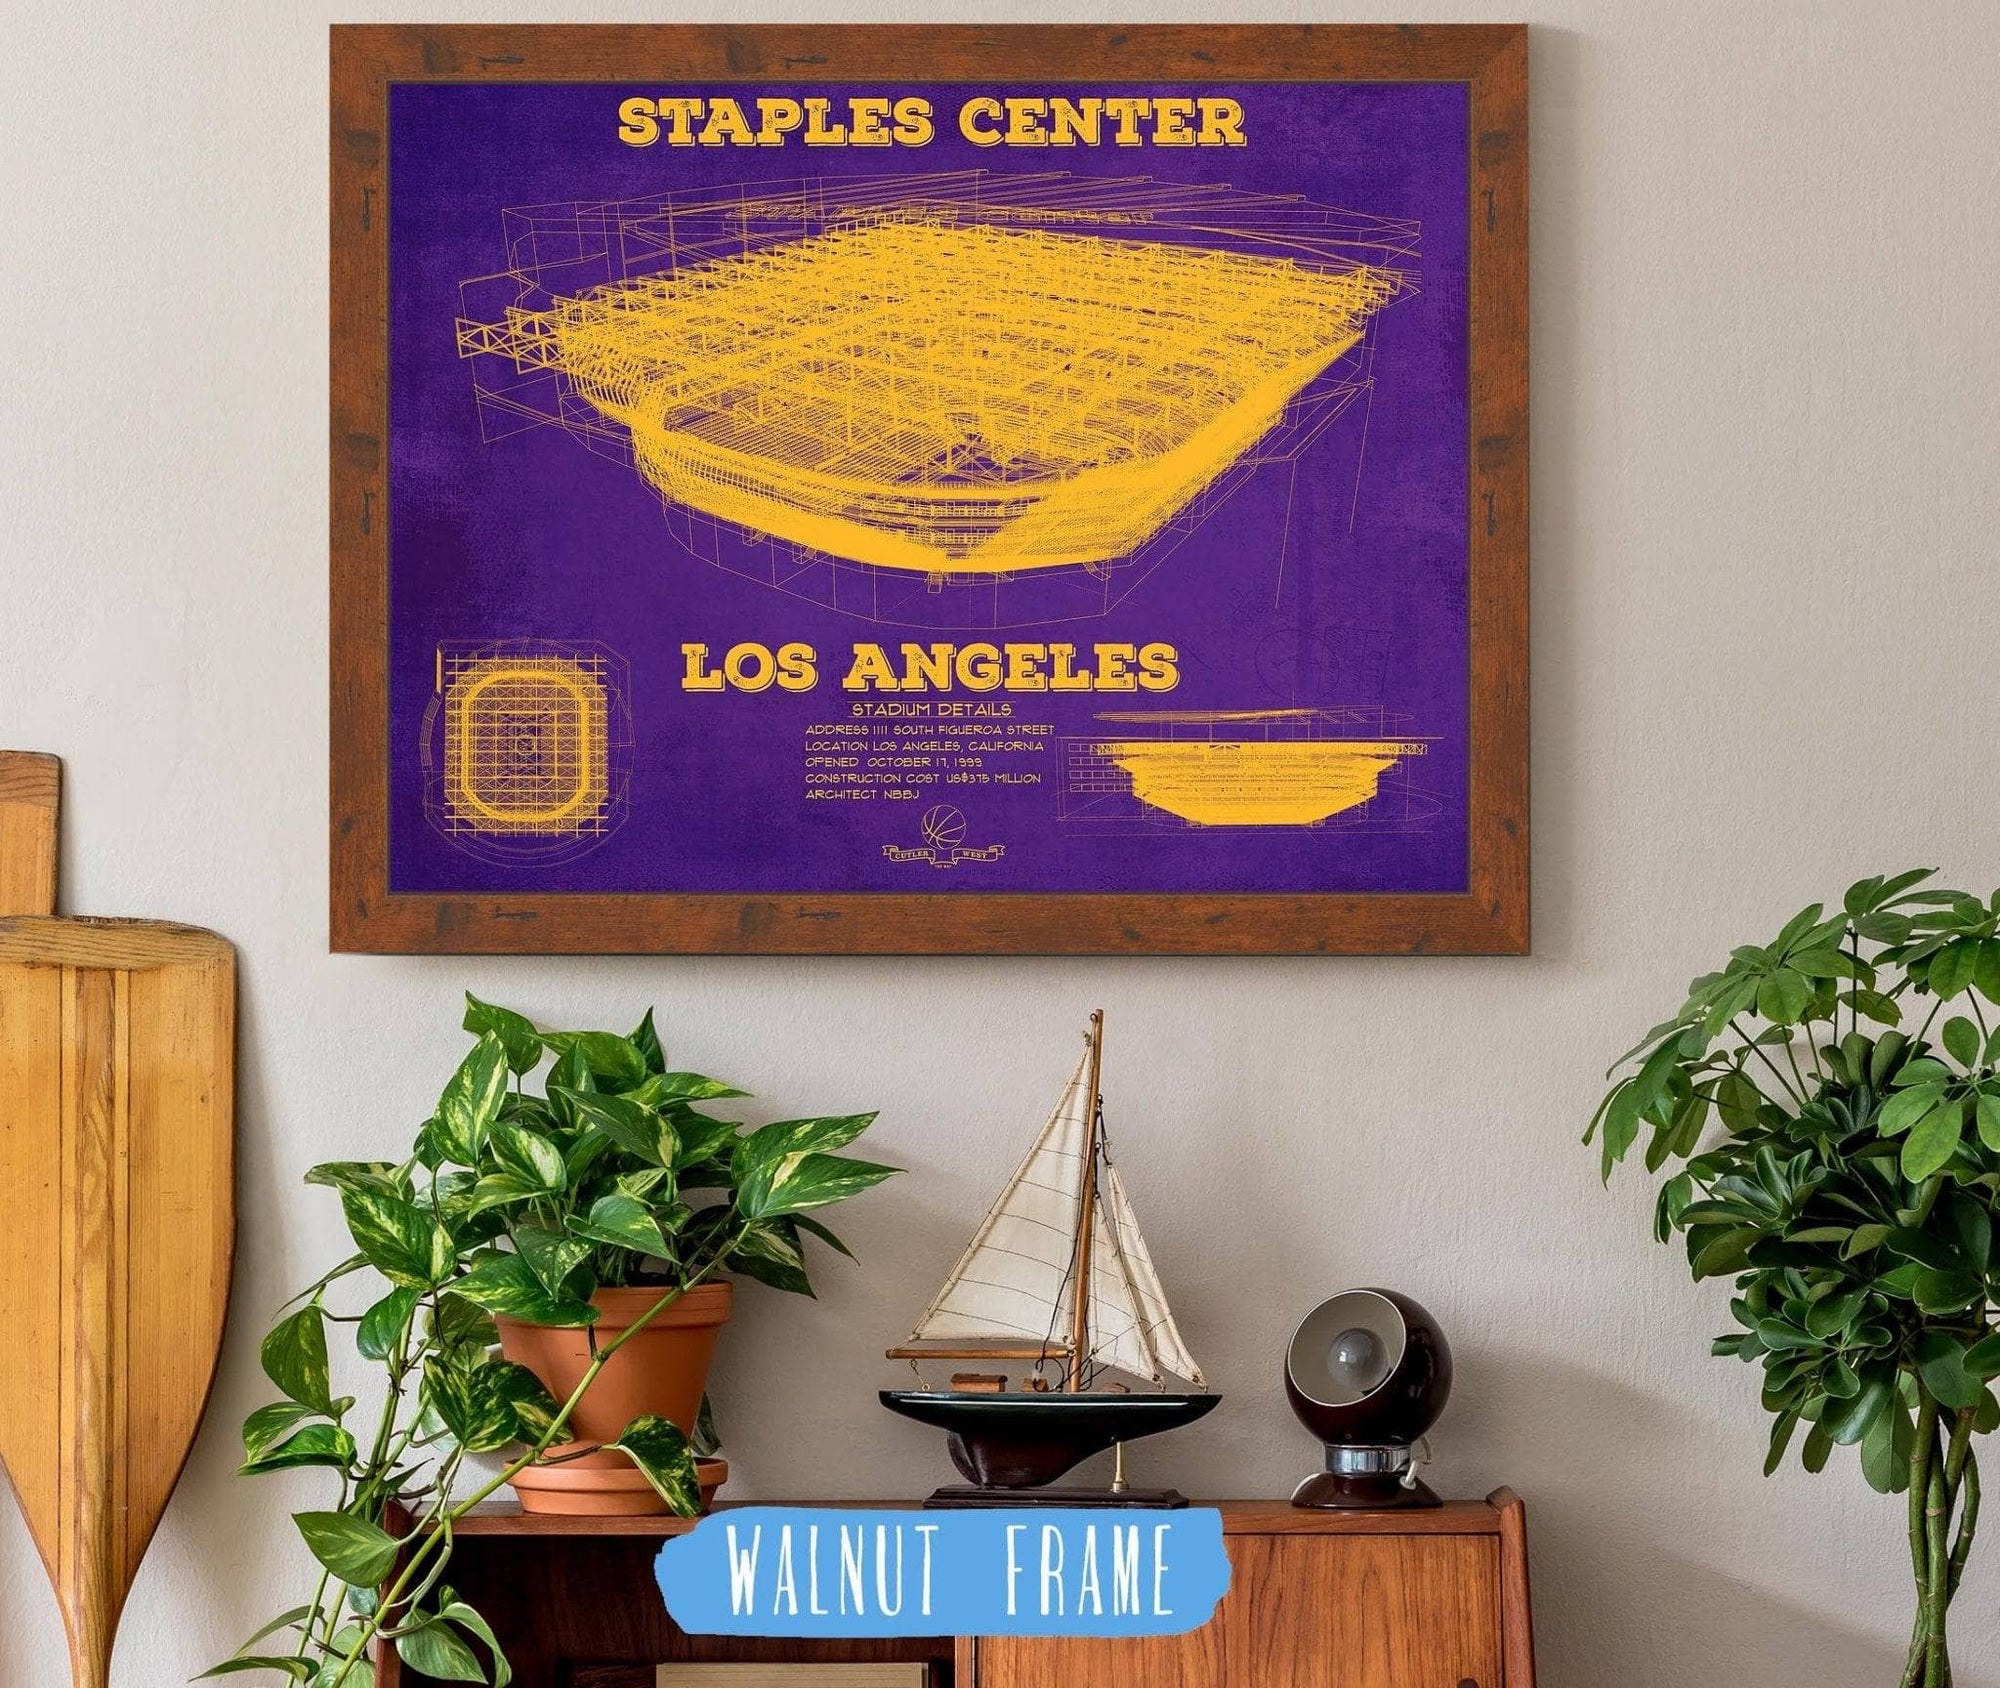 Cutler West Basketball Collection 14" x 11" / Walnut Frame LA Lakers - Staples Center Vintage Blueprint NBA Basketball NBA Team Color Print 763679666_28215